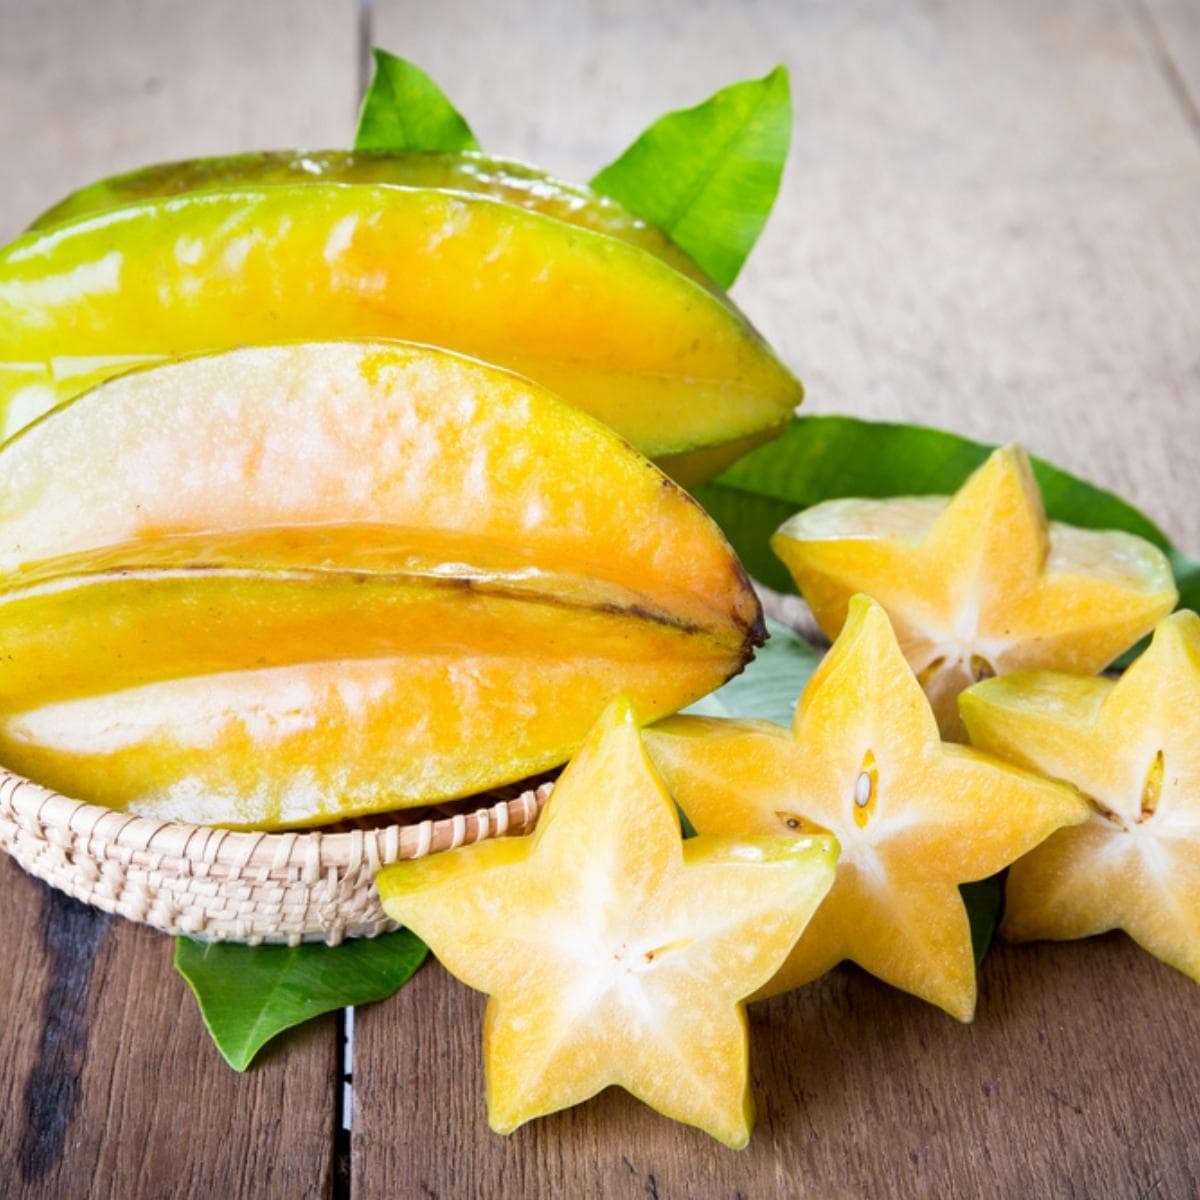 Whole and Sliced Starfruits